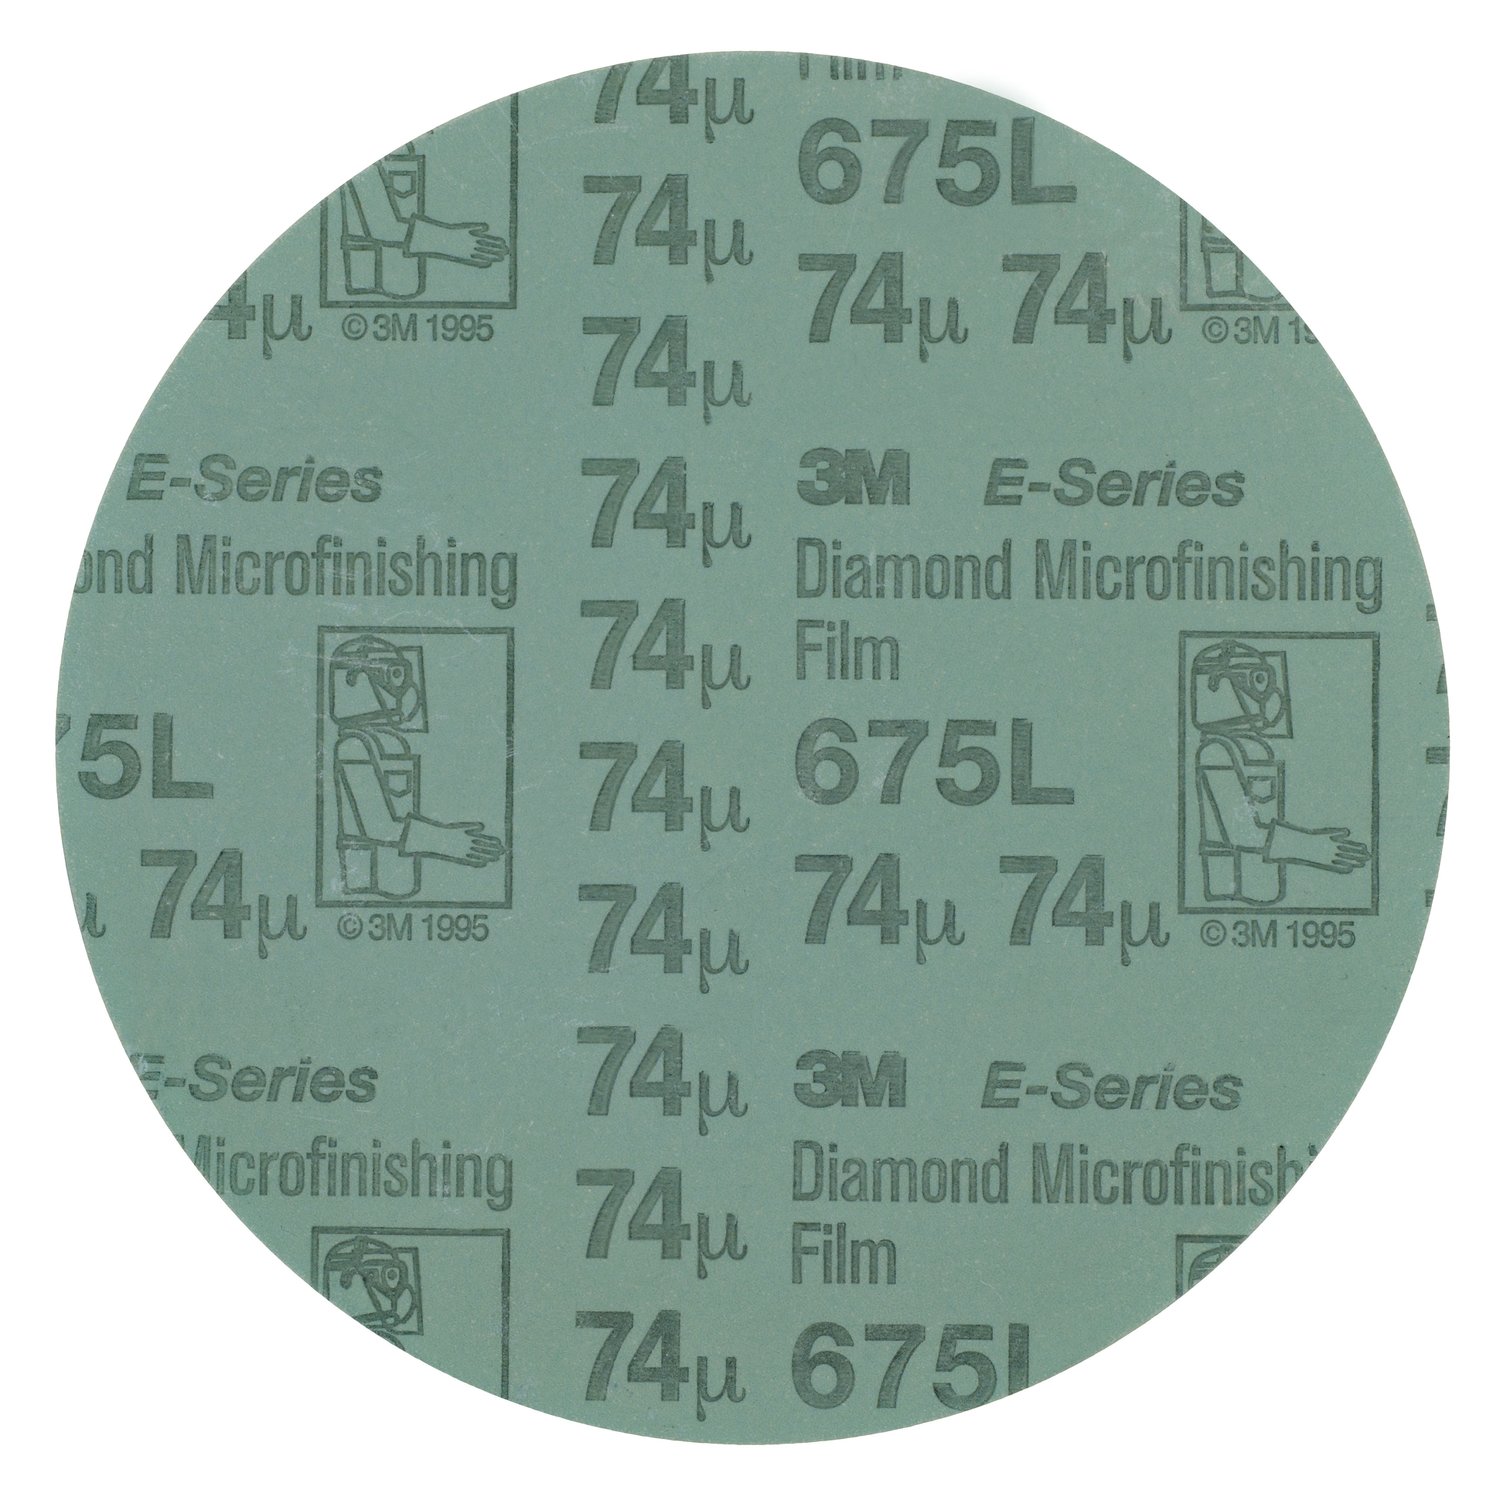 7100045794 - 3M Diamond Microfinishing Film Disc 675L, 74 Mic, Config